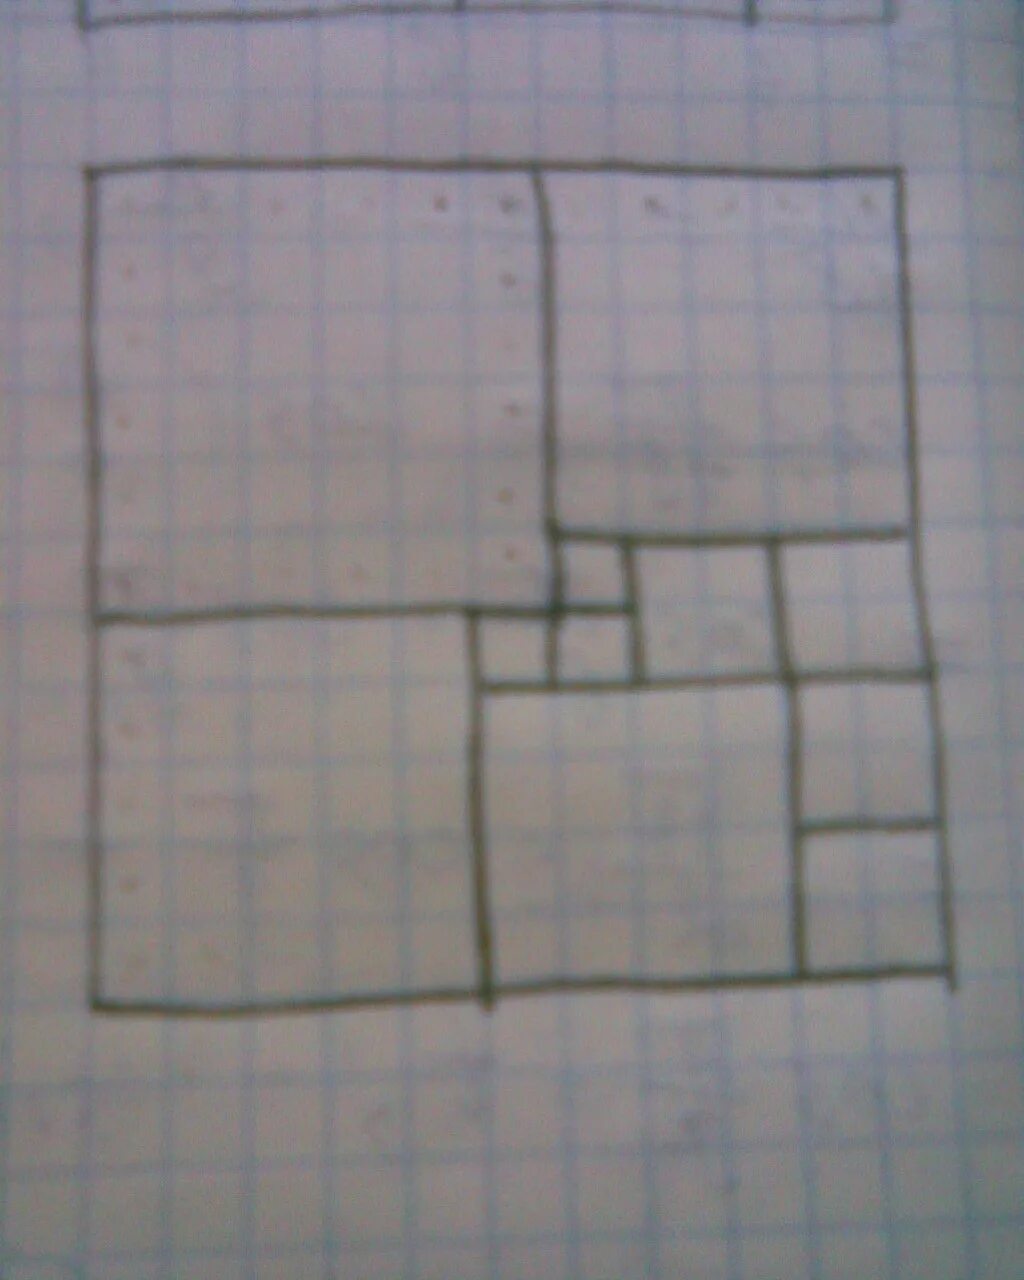 Квадрат на рисунке разбит на 11. Разрежьте квадрат 11 на 11 по сторонам клеток на 11 квадратов. Разрежьте квадрат 11х11 по сторонам клеток на 11 квадратов. Разделить квадрат на 11 квадратов. Разрезать квадрат на 11 квадратов.